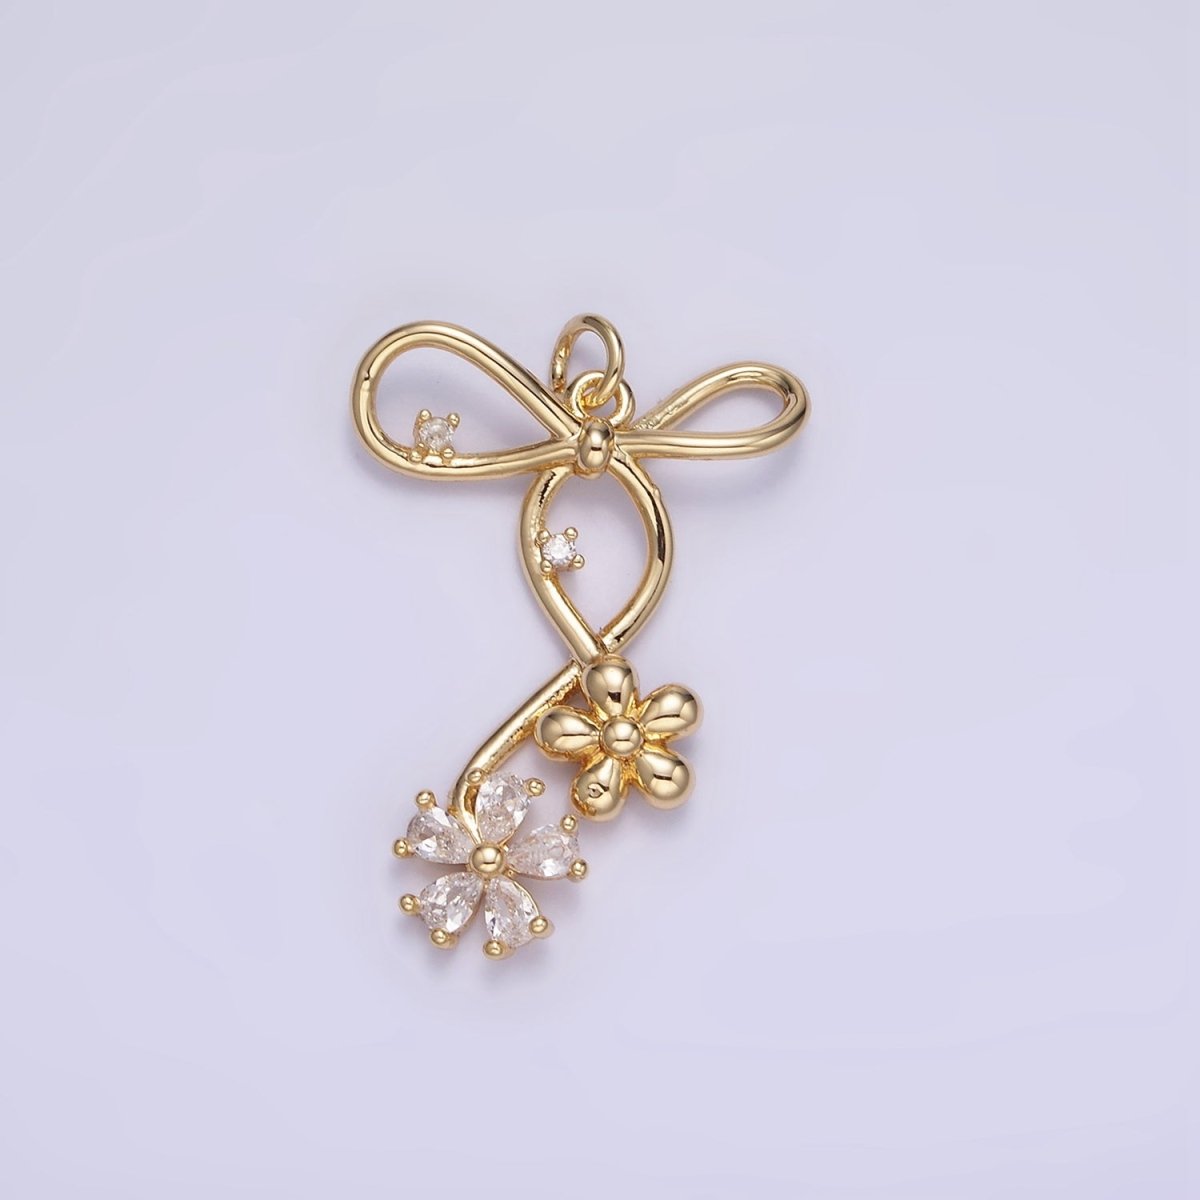 14K Gold Filled Pink, Blue, Clear CZ Flower Ribbon Bow Charm | W770 - W772 - DLUXCA